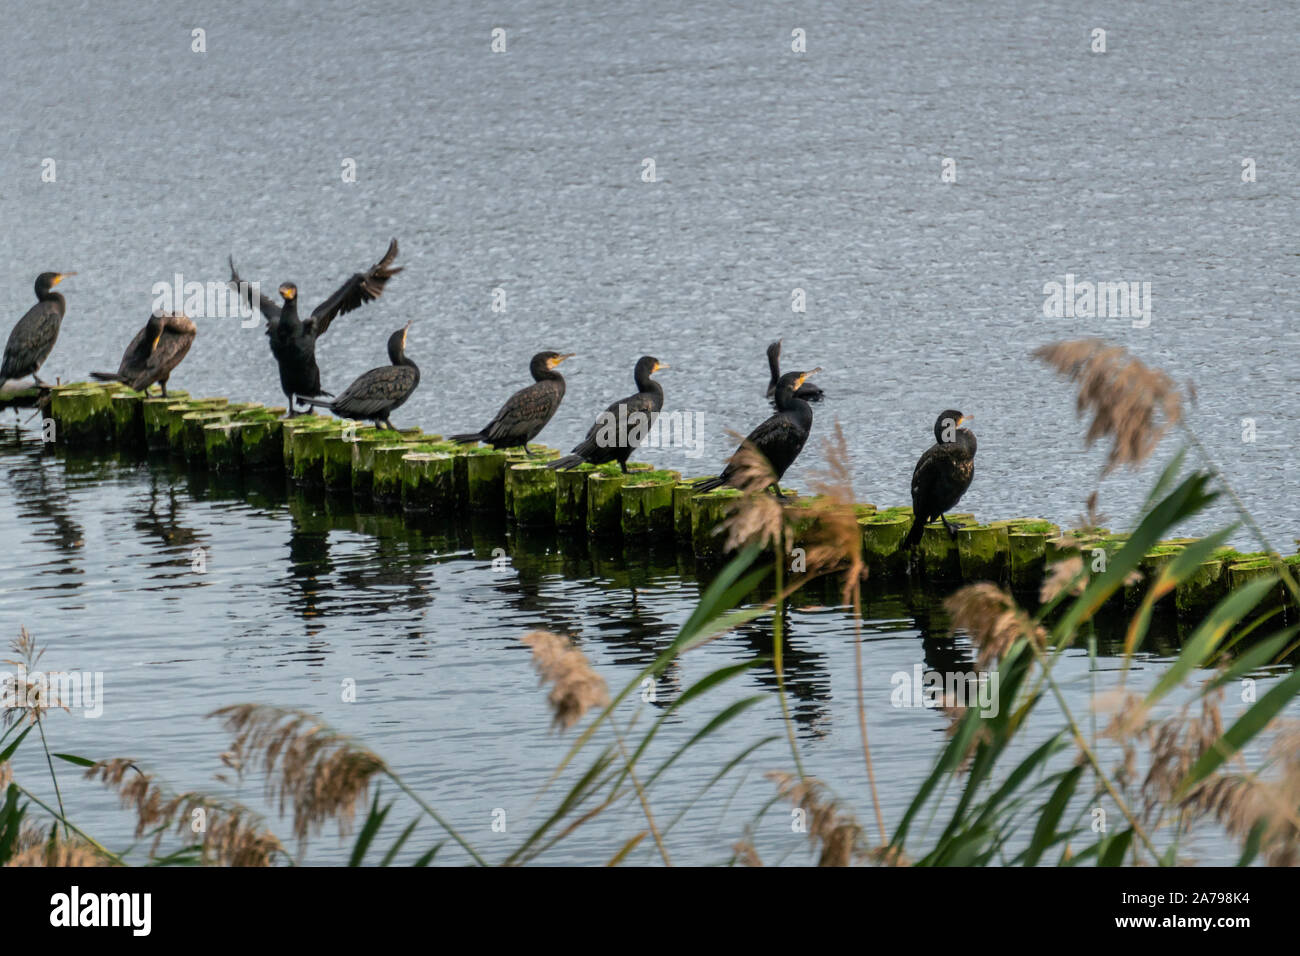 cormorant, Phalacrocorax, lake Rumelsbucht, Berlin Stock Photo